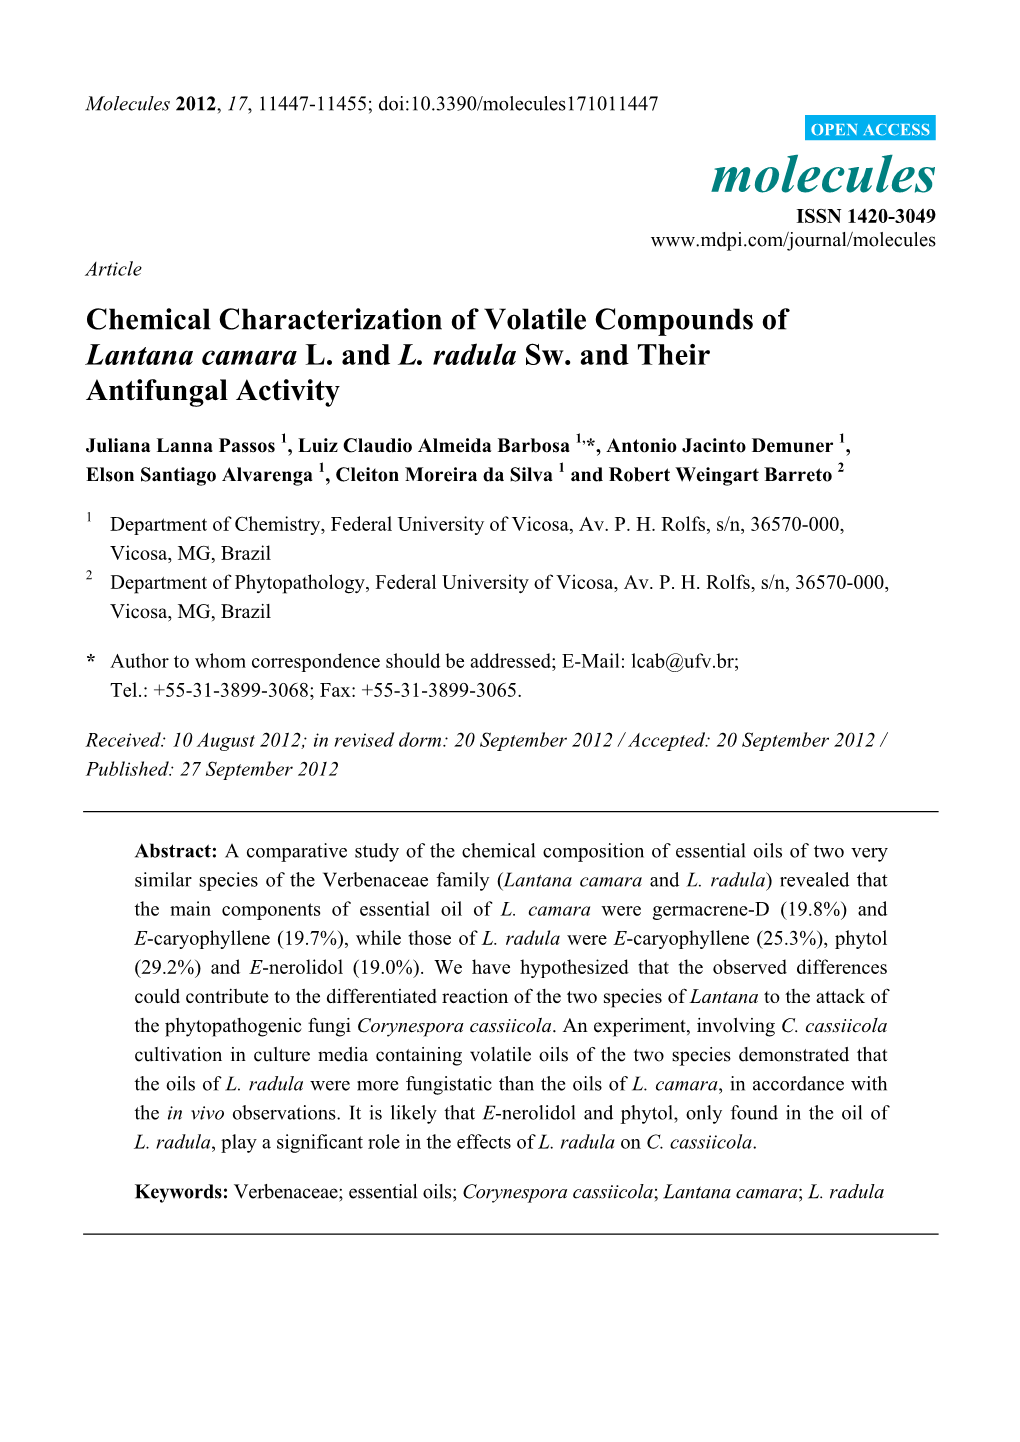 Chemical Characterization of Volatile Compounds of Lantana Camara L